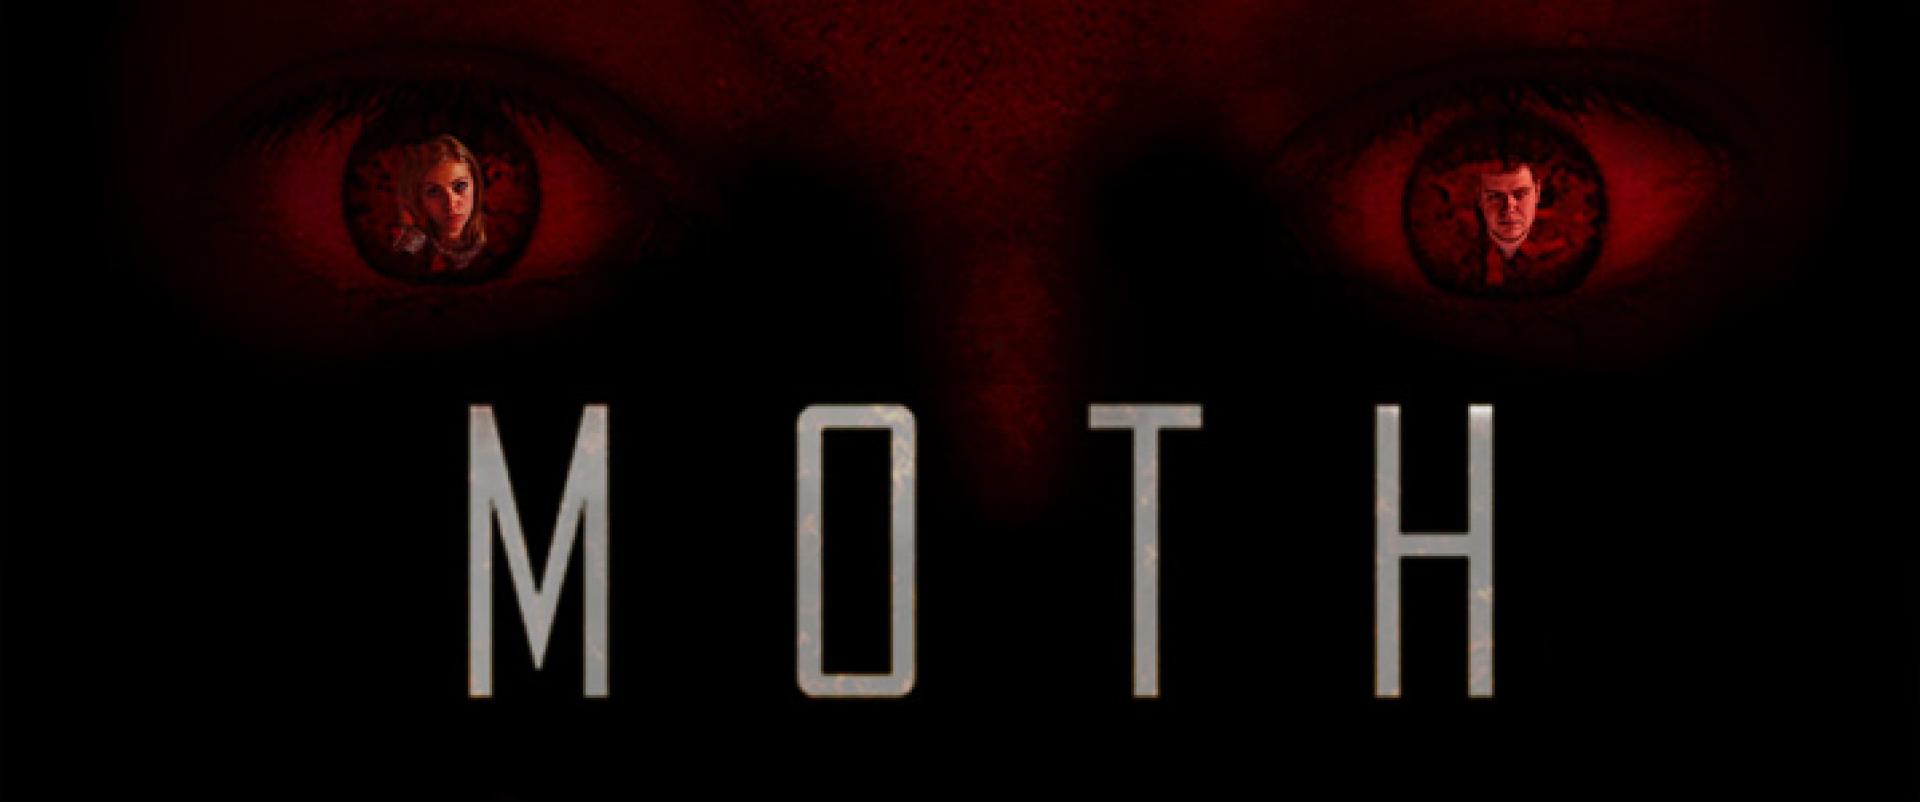 Moth (2016)